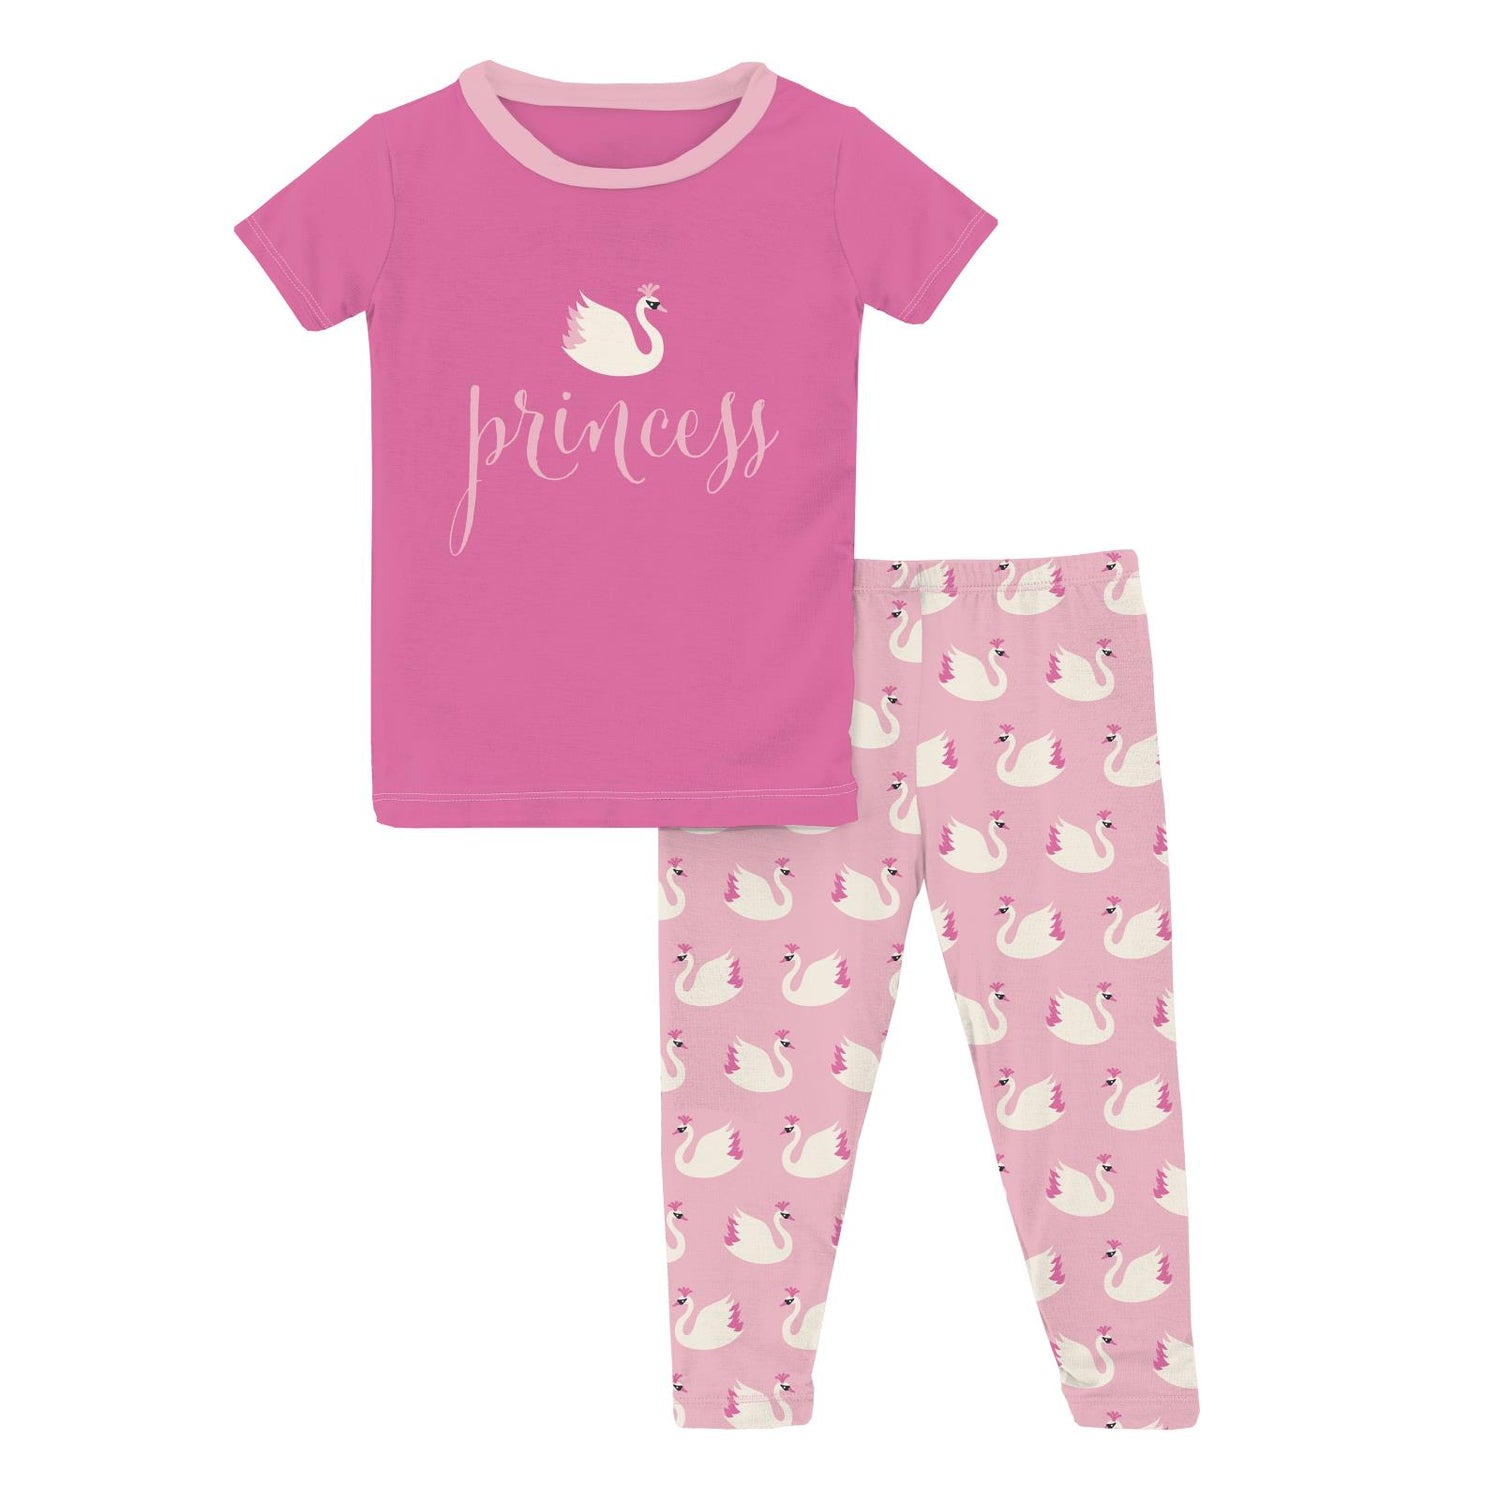 Short Sleeve Graphic Tee Pajama Set in Cake Pop Swan Princess